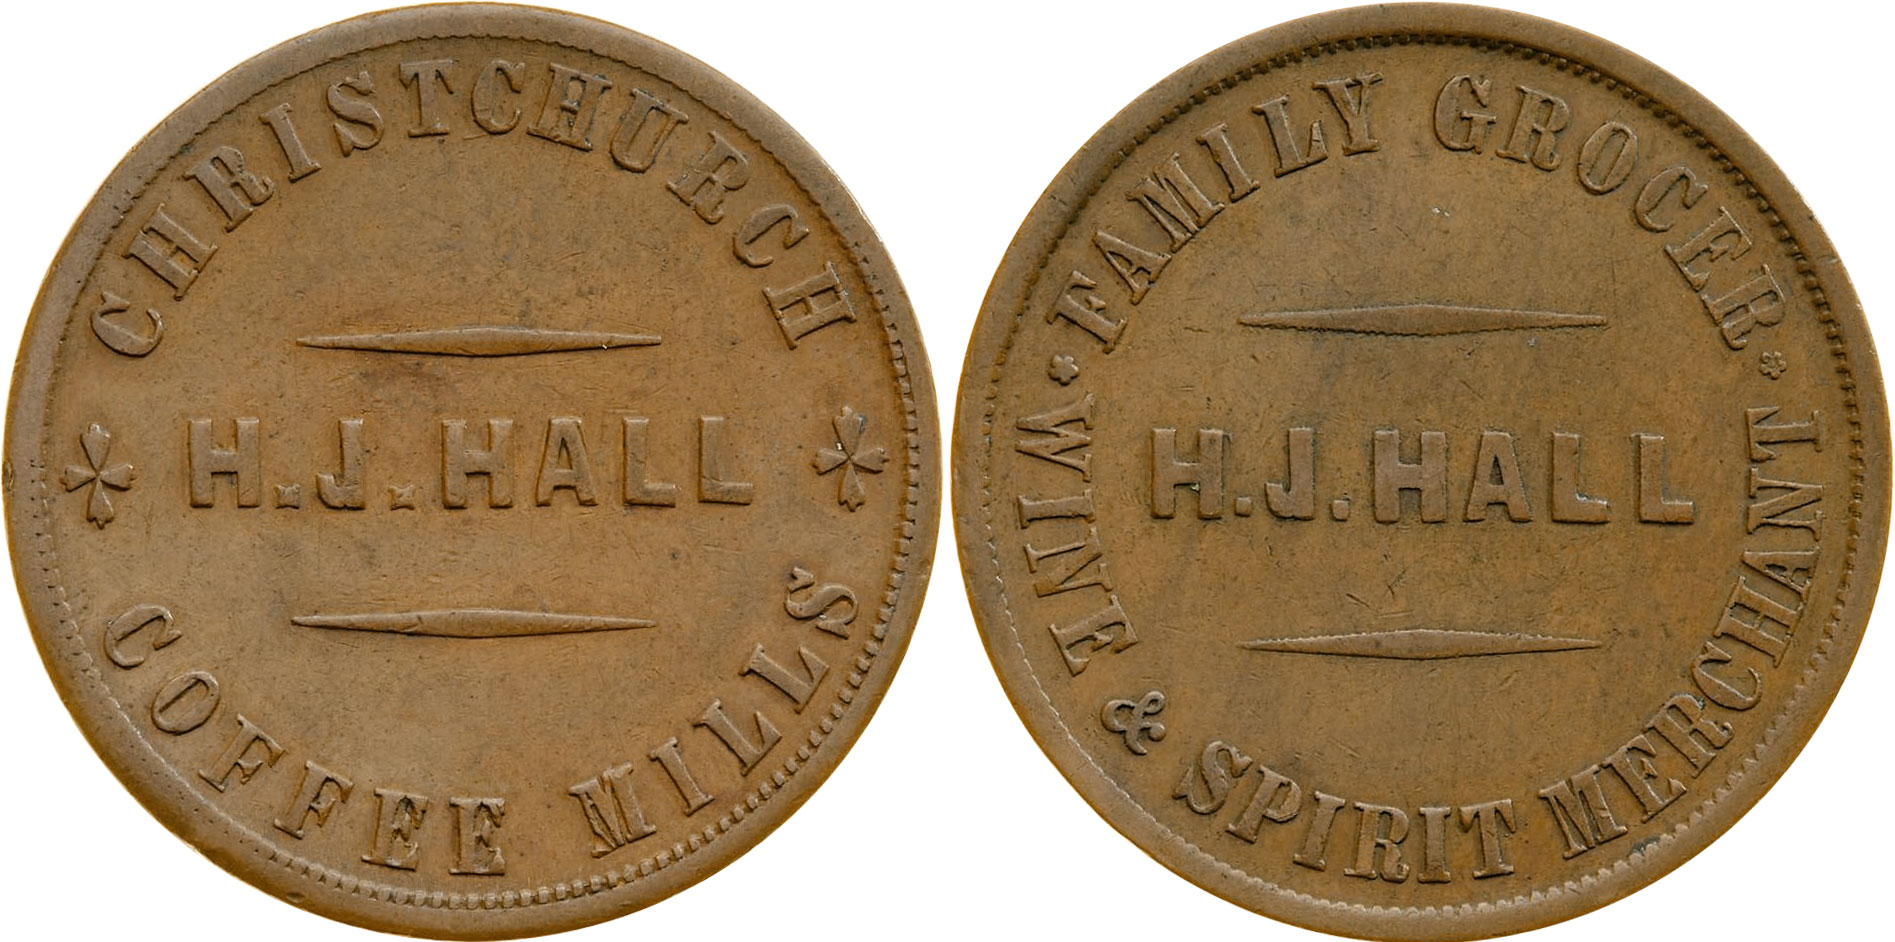 H. J. Hall - Grocer